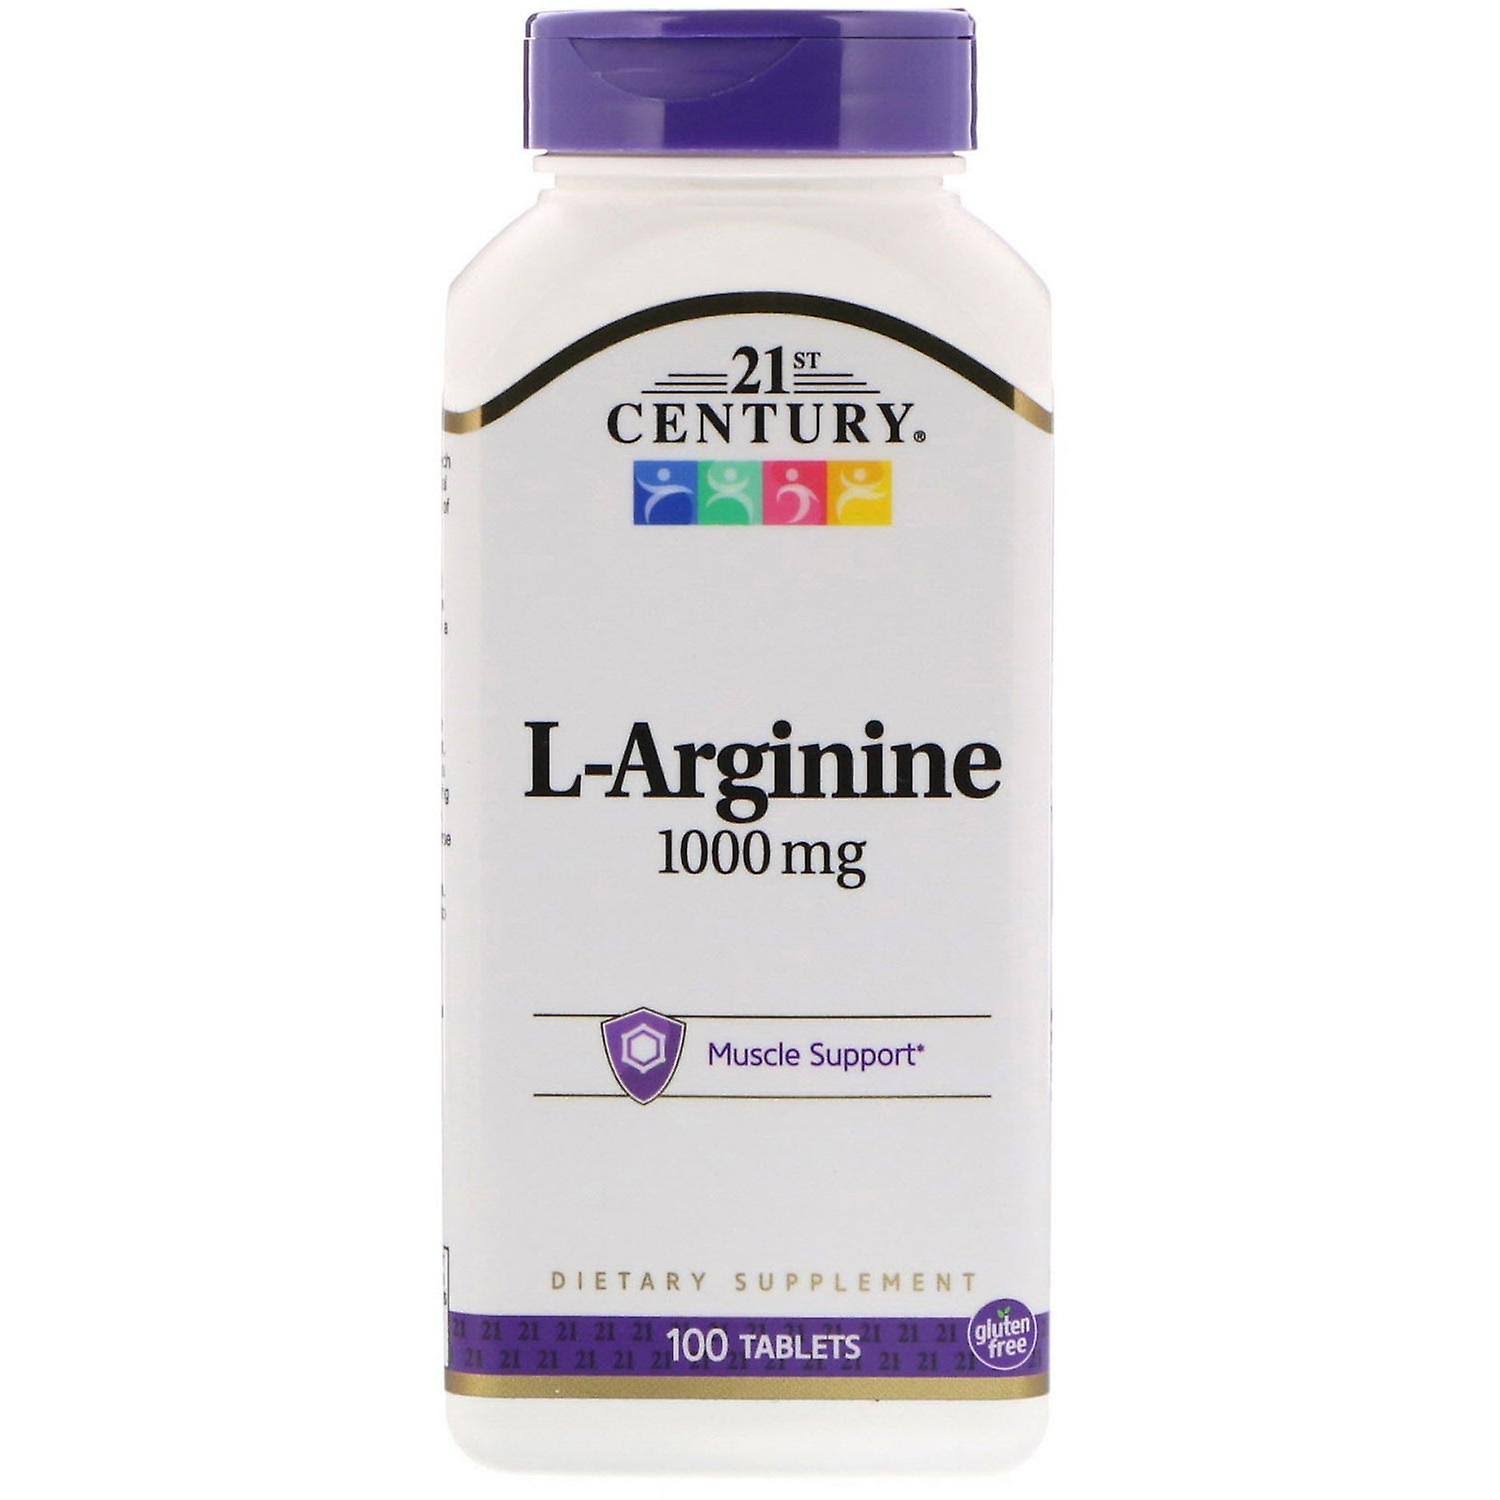 21st Century L-Arginine Dietary Supplement - 1000mg, 100 Tablets